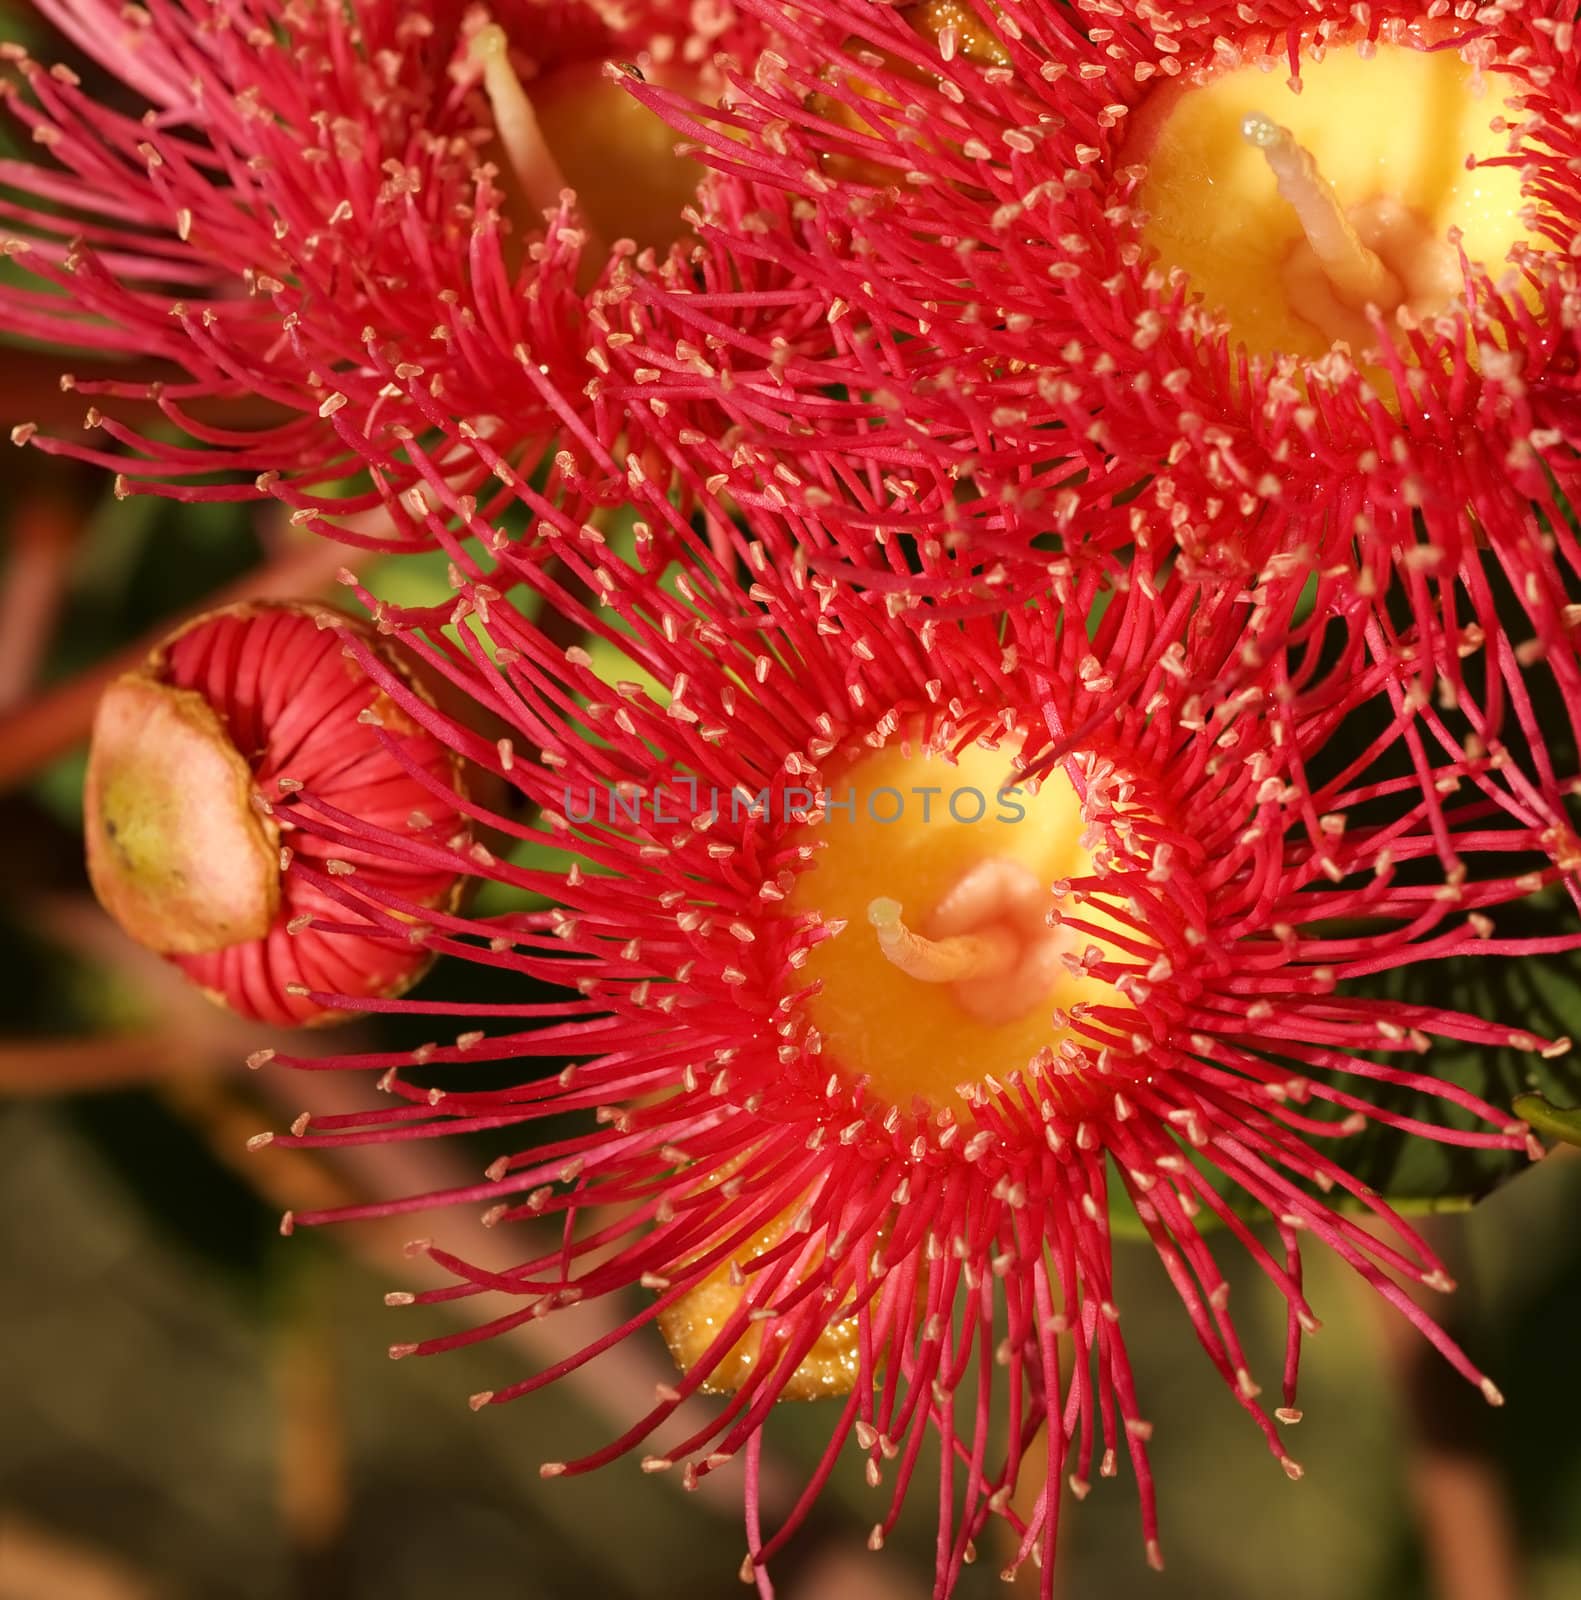 red flowers gum tree eucalyptus phytocarpa australian native by sherj